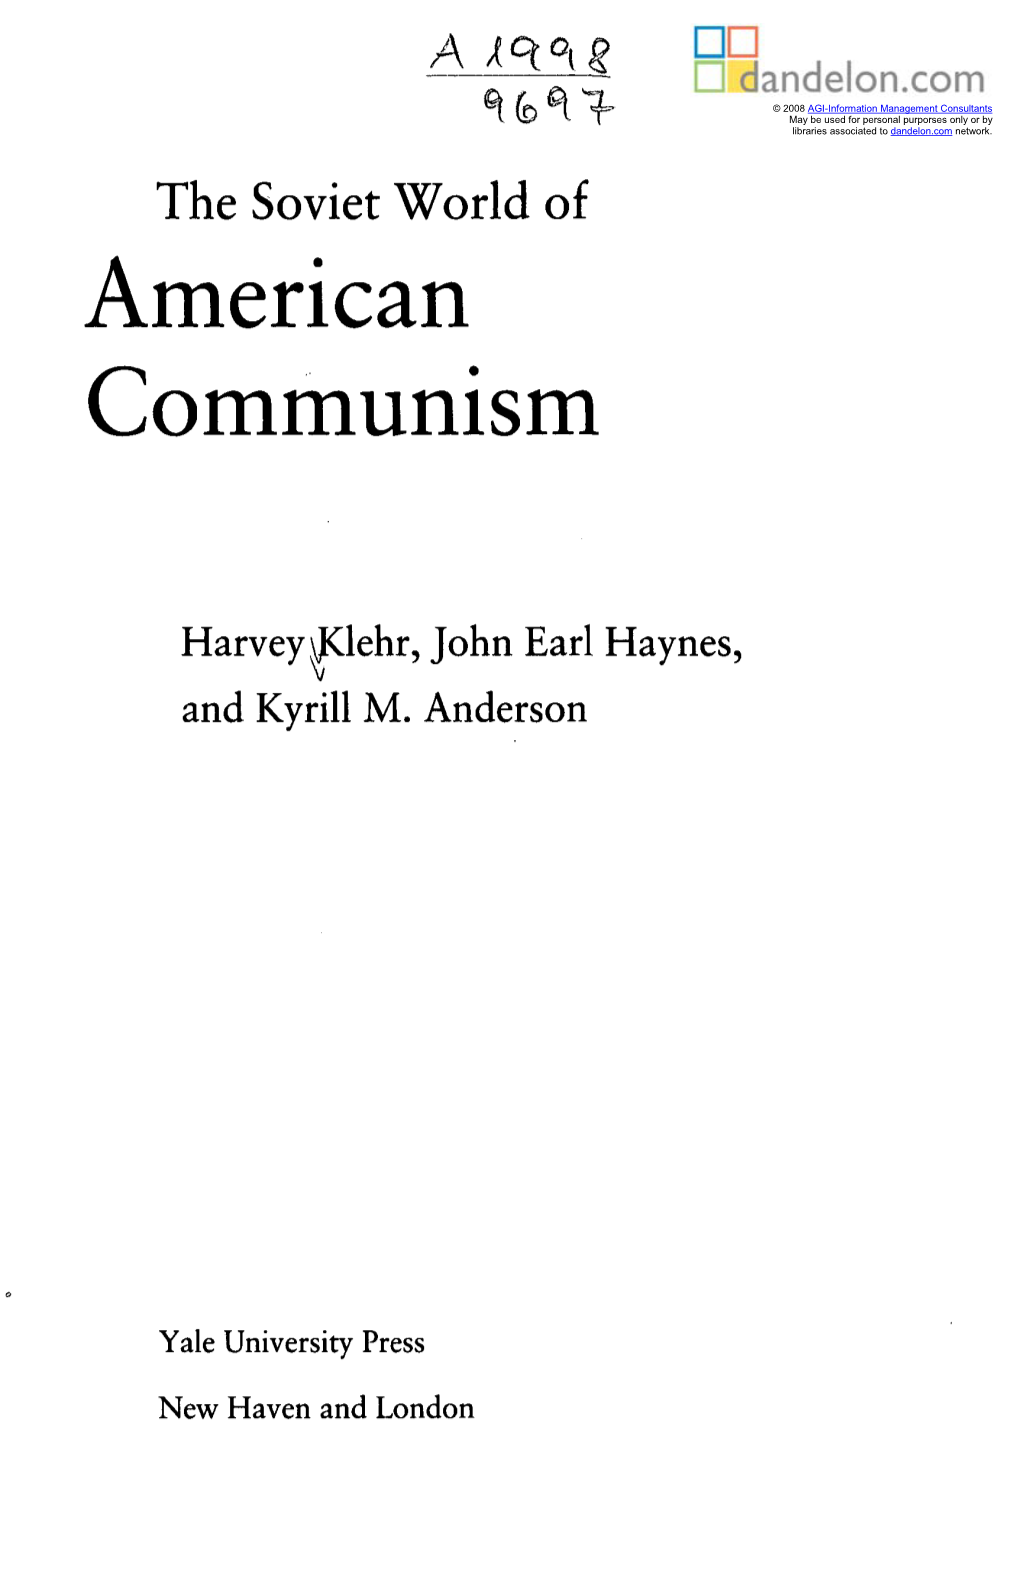 American Communism